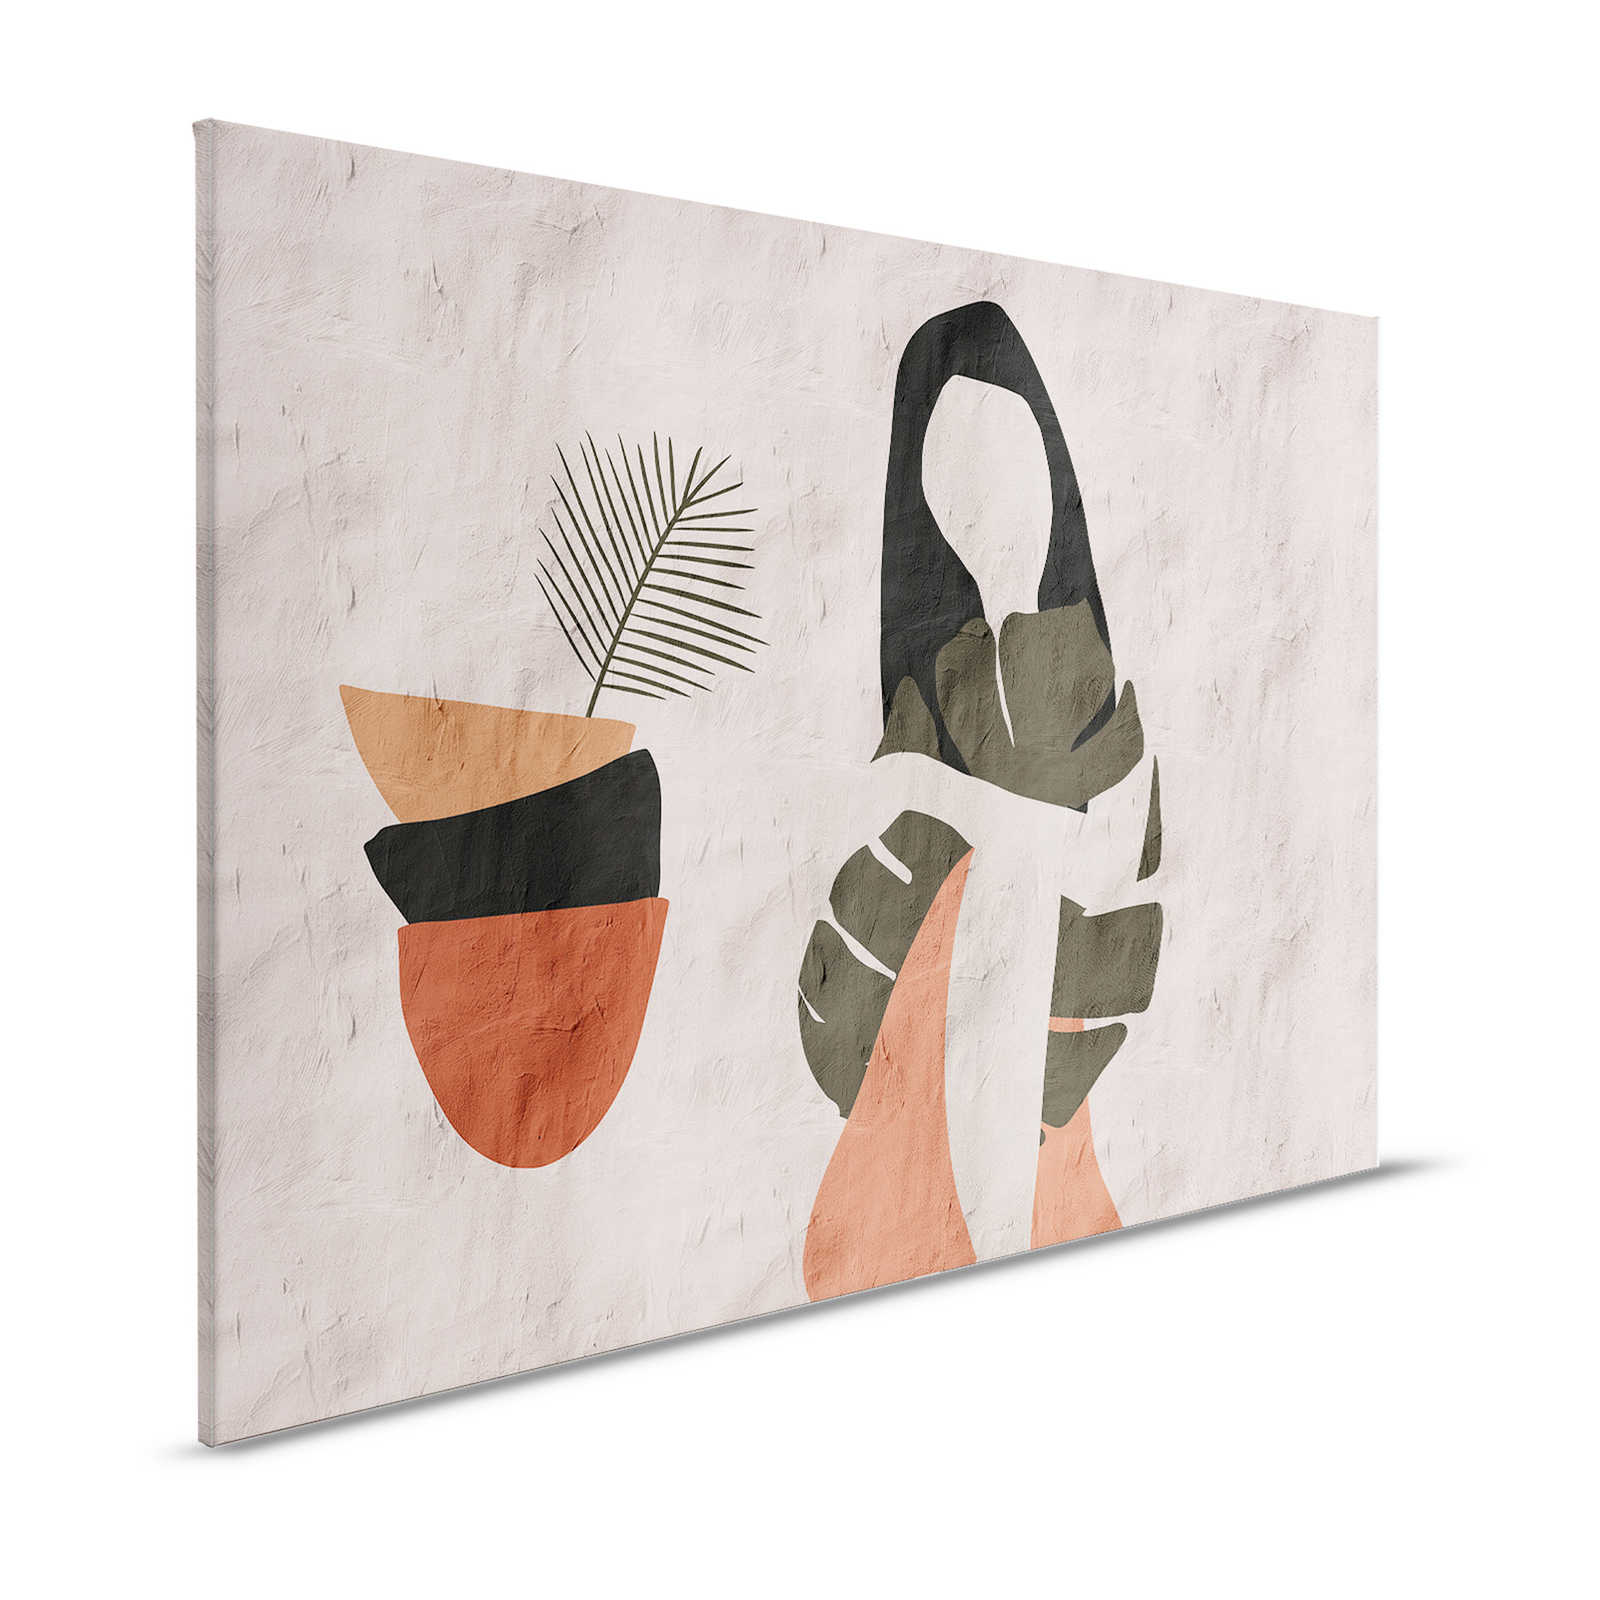 Santa Fe 1 - Quadro su tela Argilla Beige con disegno etnico - 1,20 m x 0,80 m
